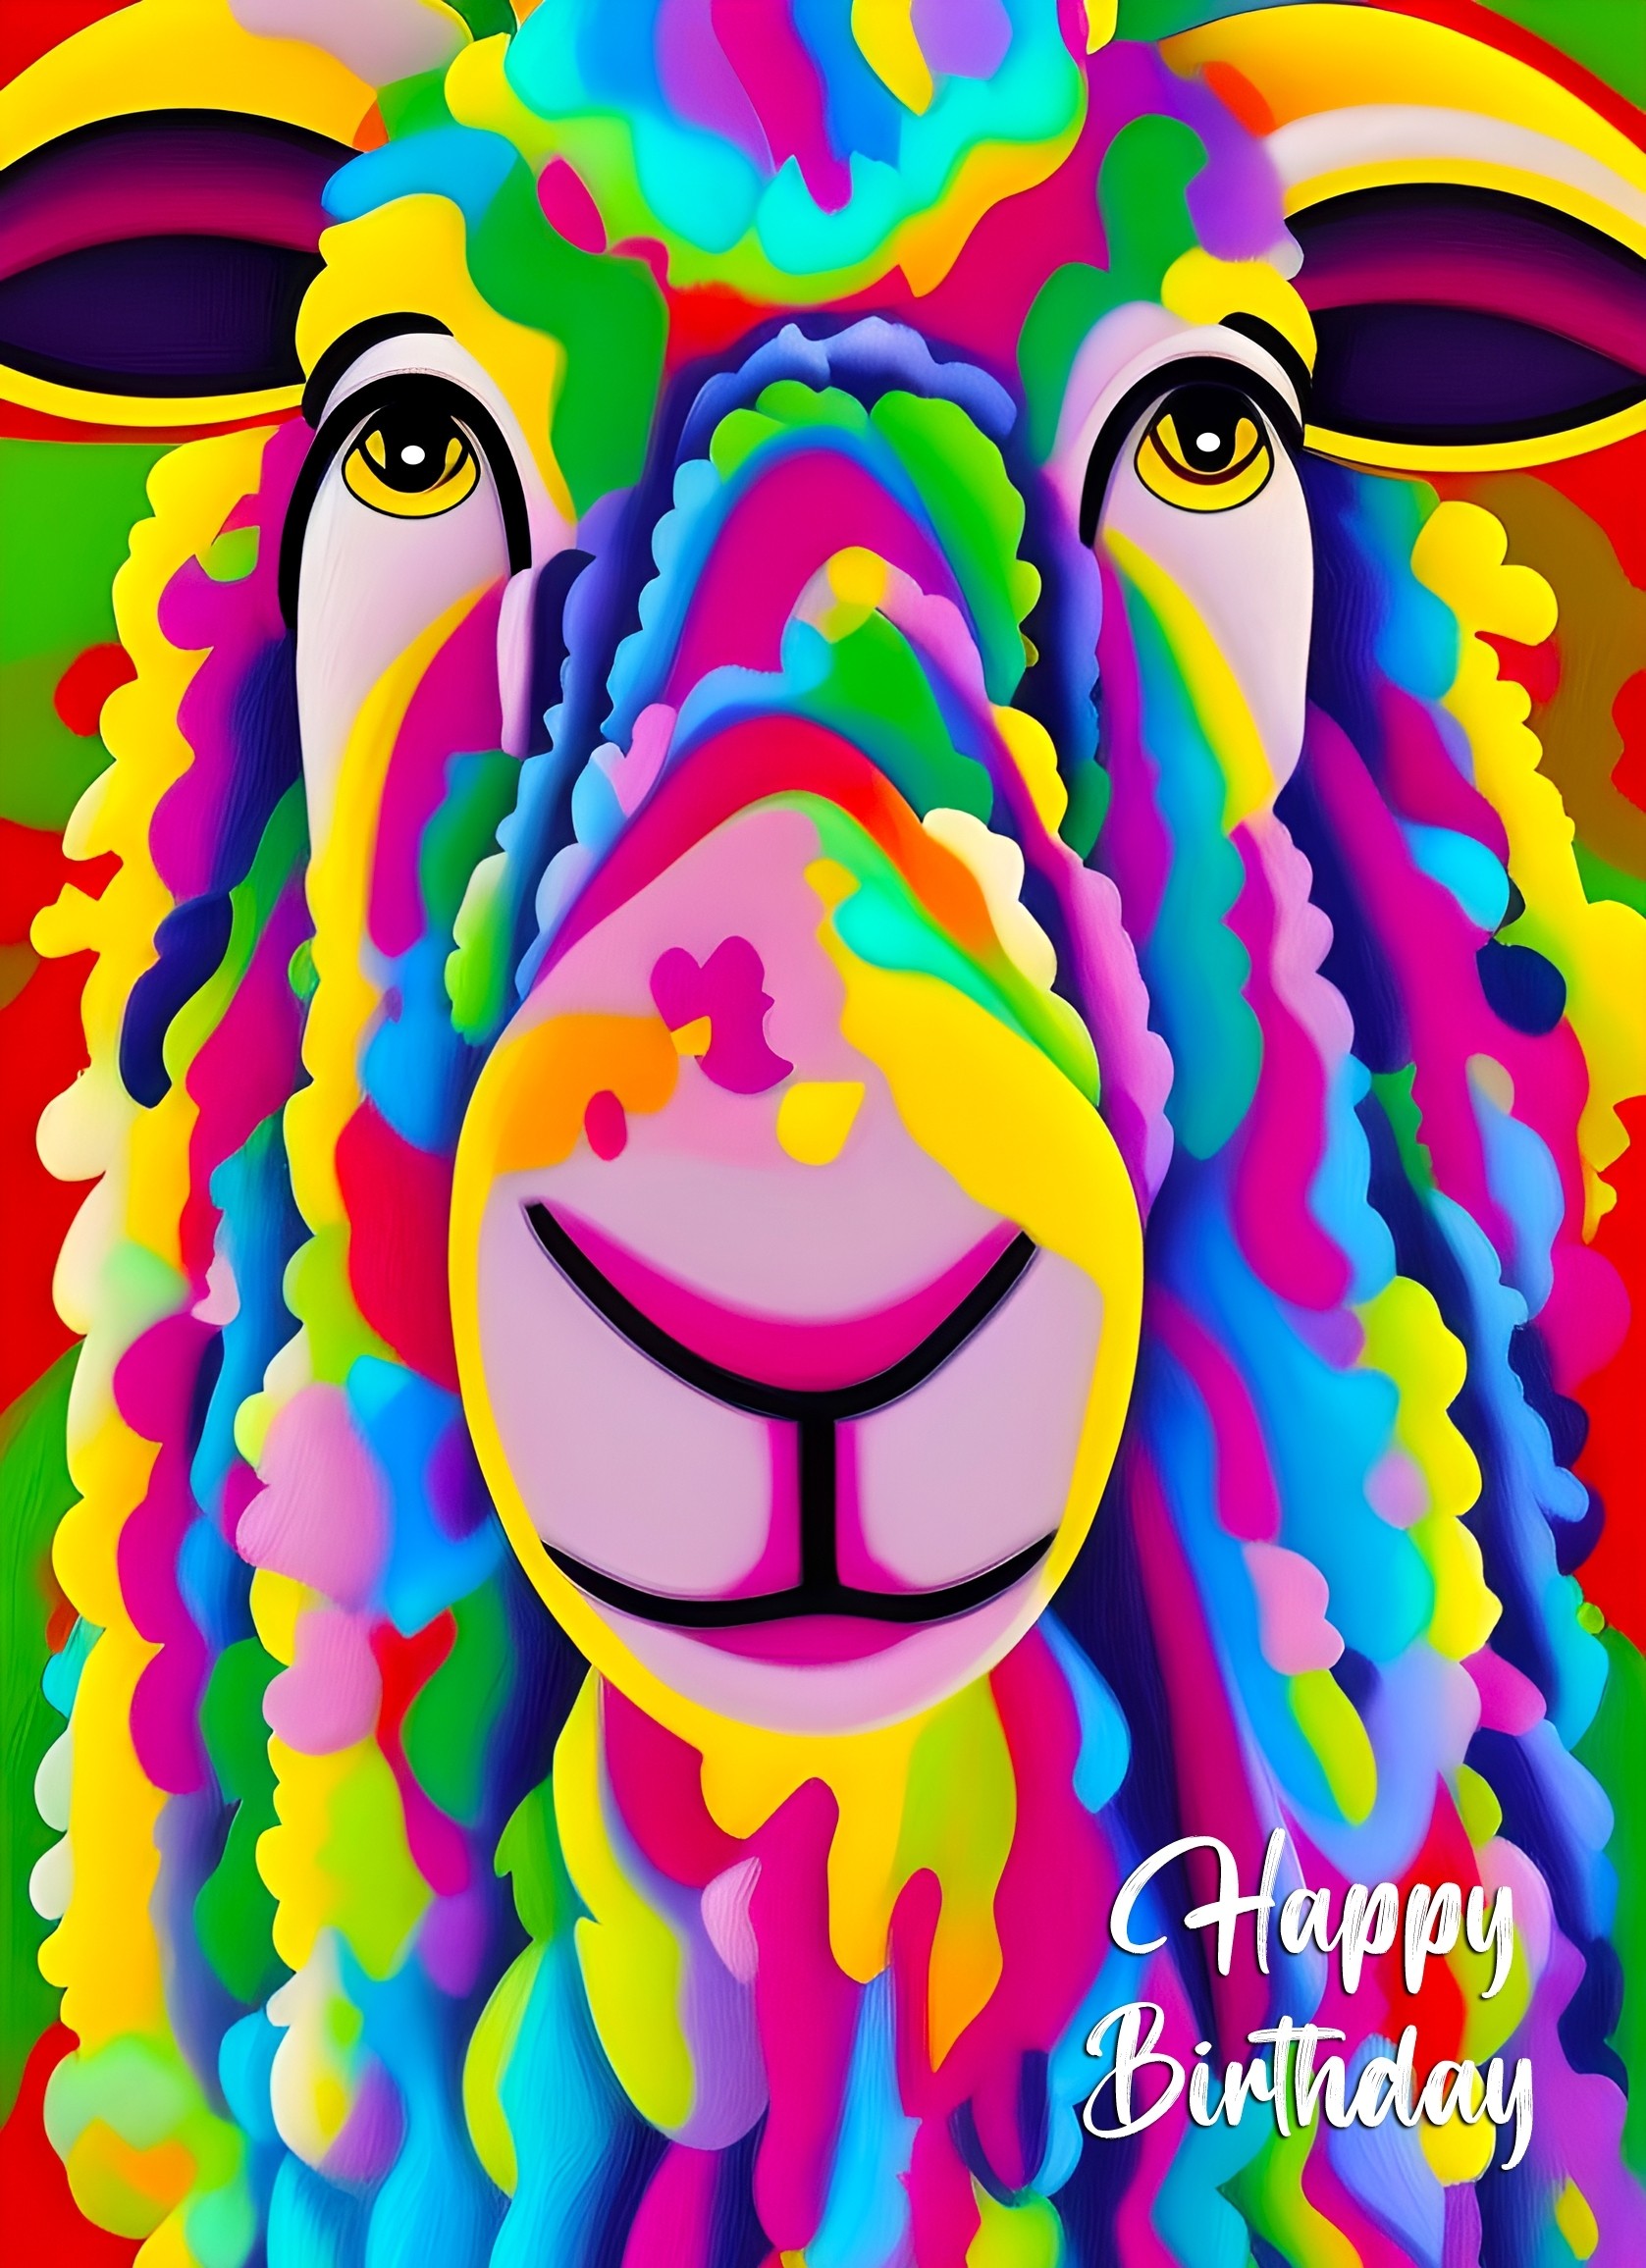 Sheep Animal Colourful Abstract Art Birthday Card